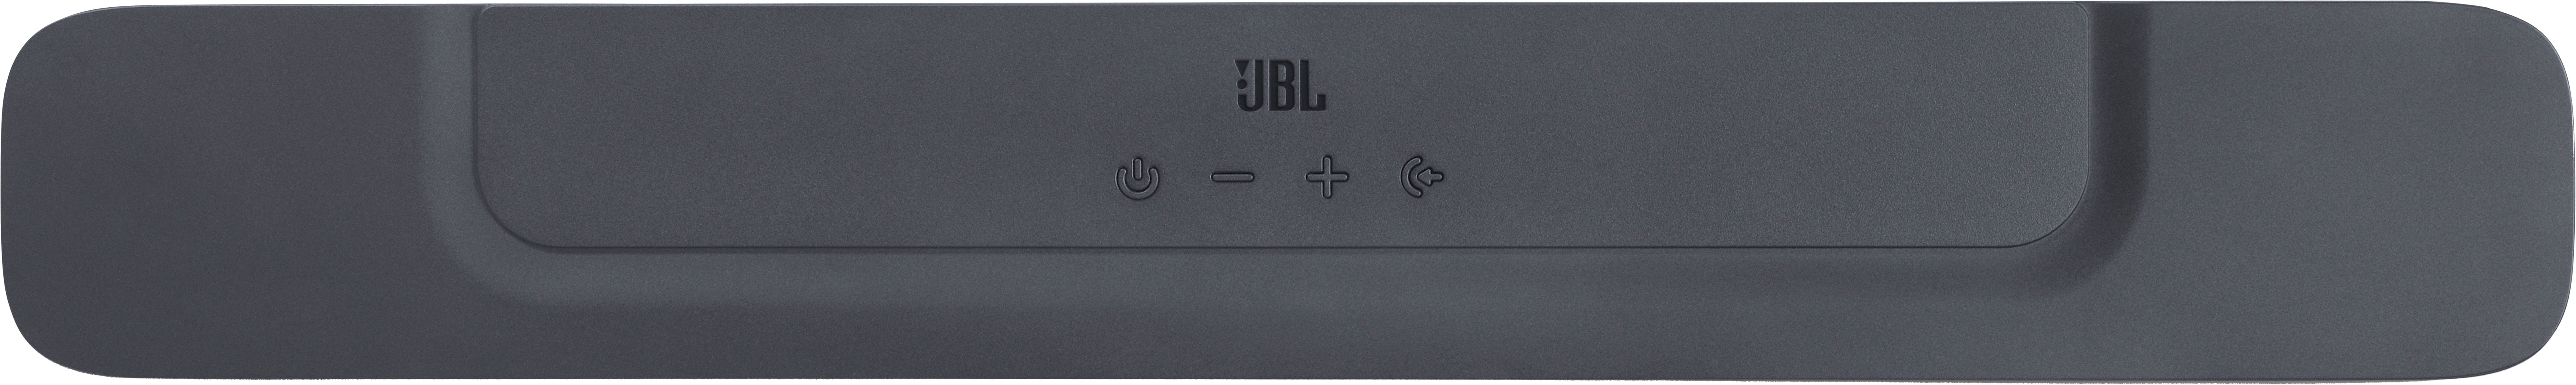 JBL 2.0 Black Buy All-in-One (MK2) Channel JBLBAR20AIOM2BLKAM - Best Soundbar